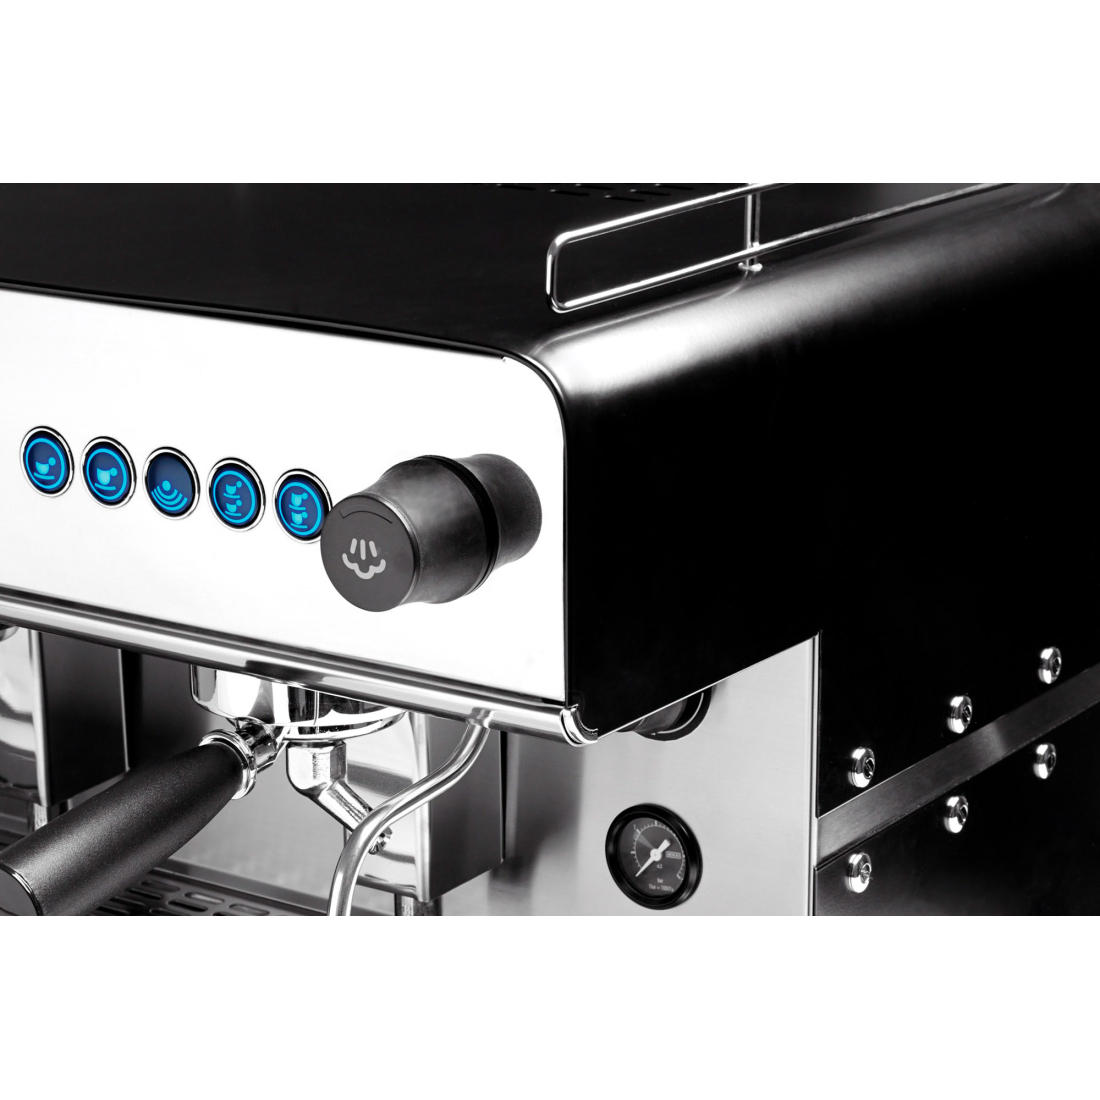 IBERITAL IB7 1 Group Espresso Machine|mkayn|مكاين